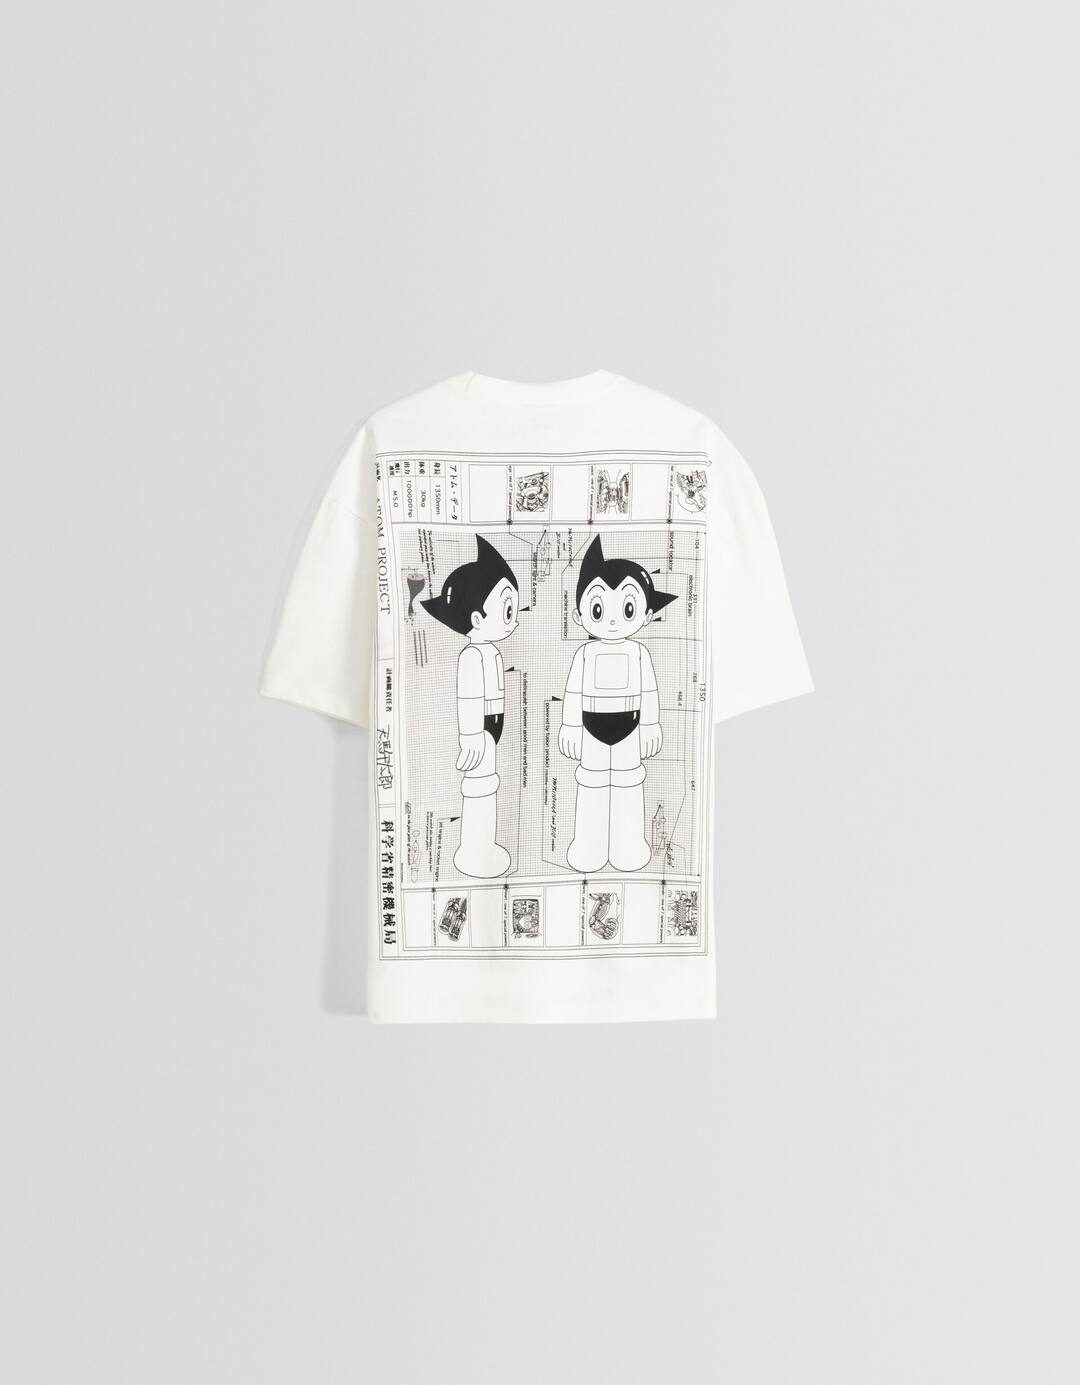 Camiseta Astro Boy manga corta boxy fit print